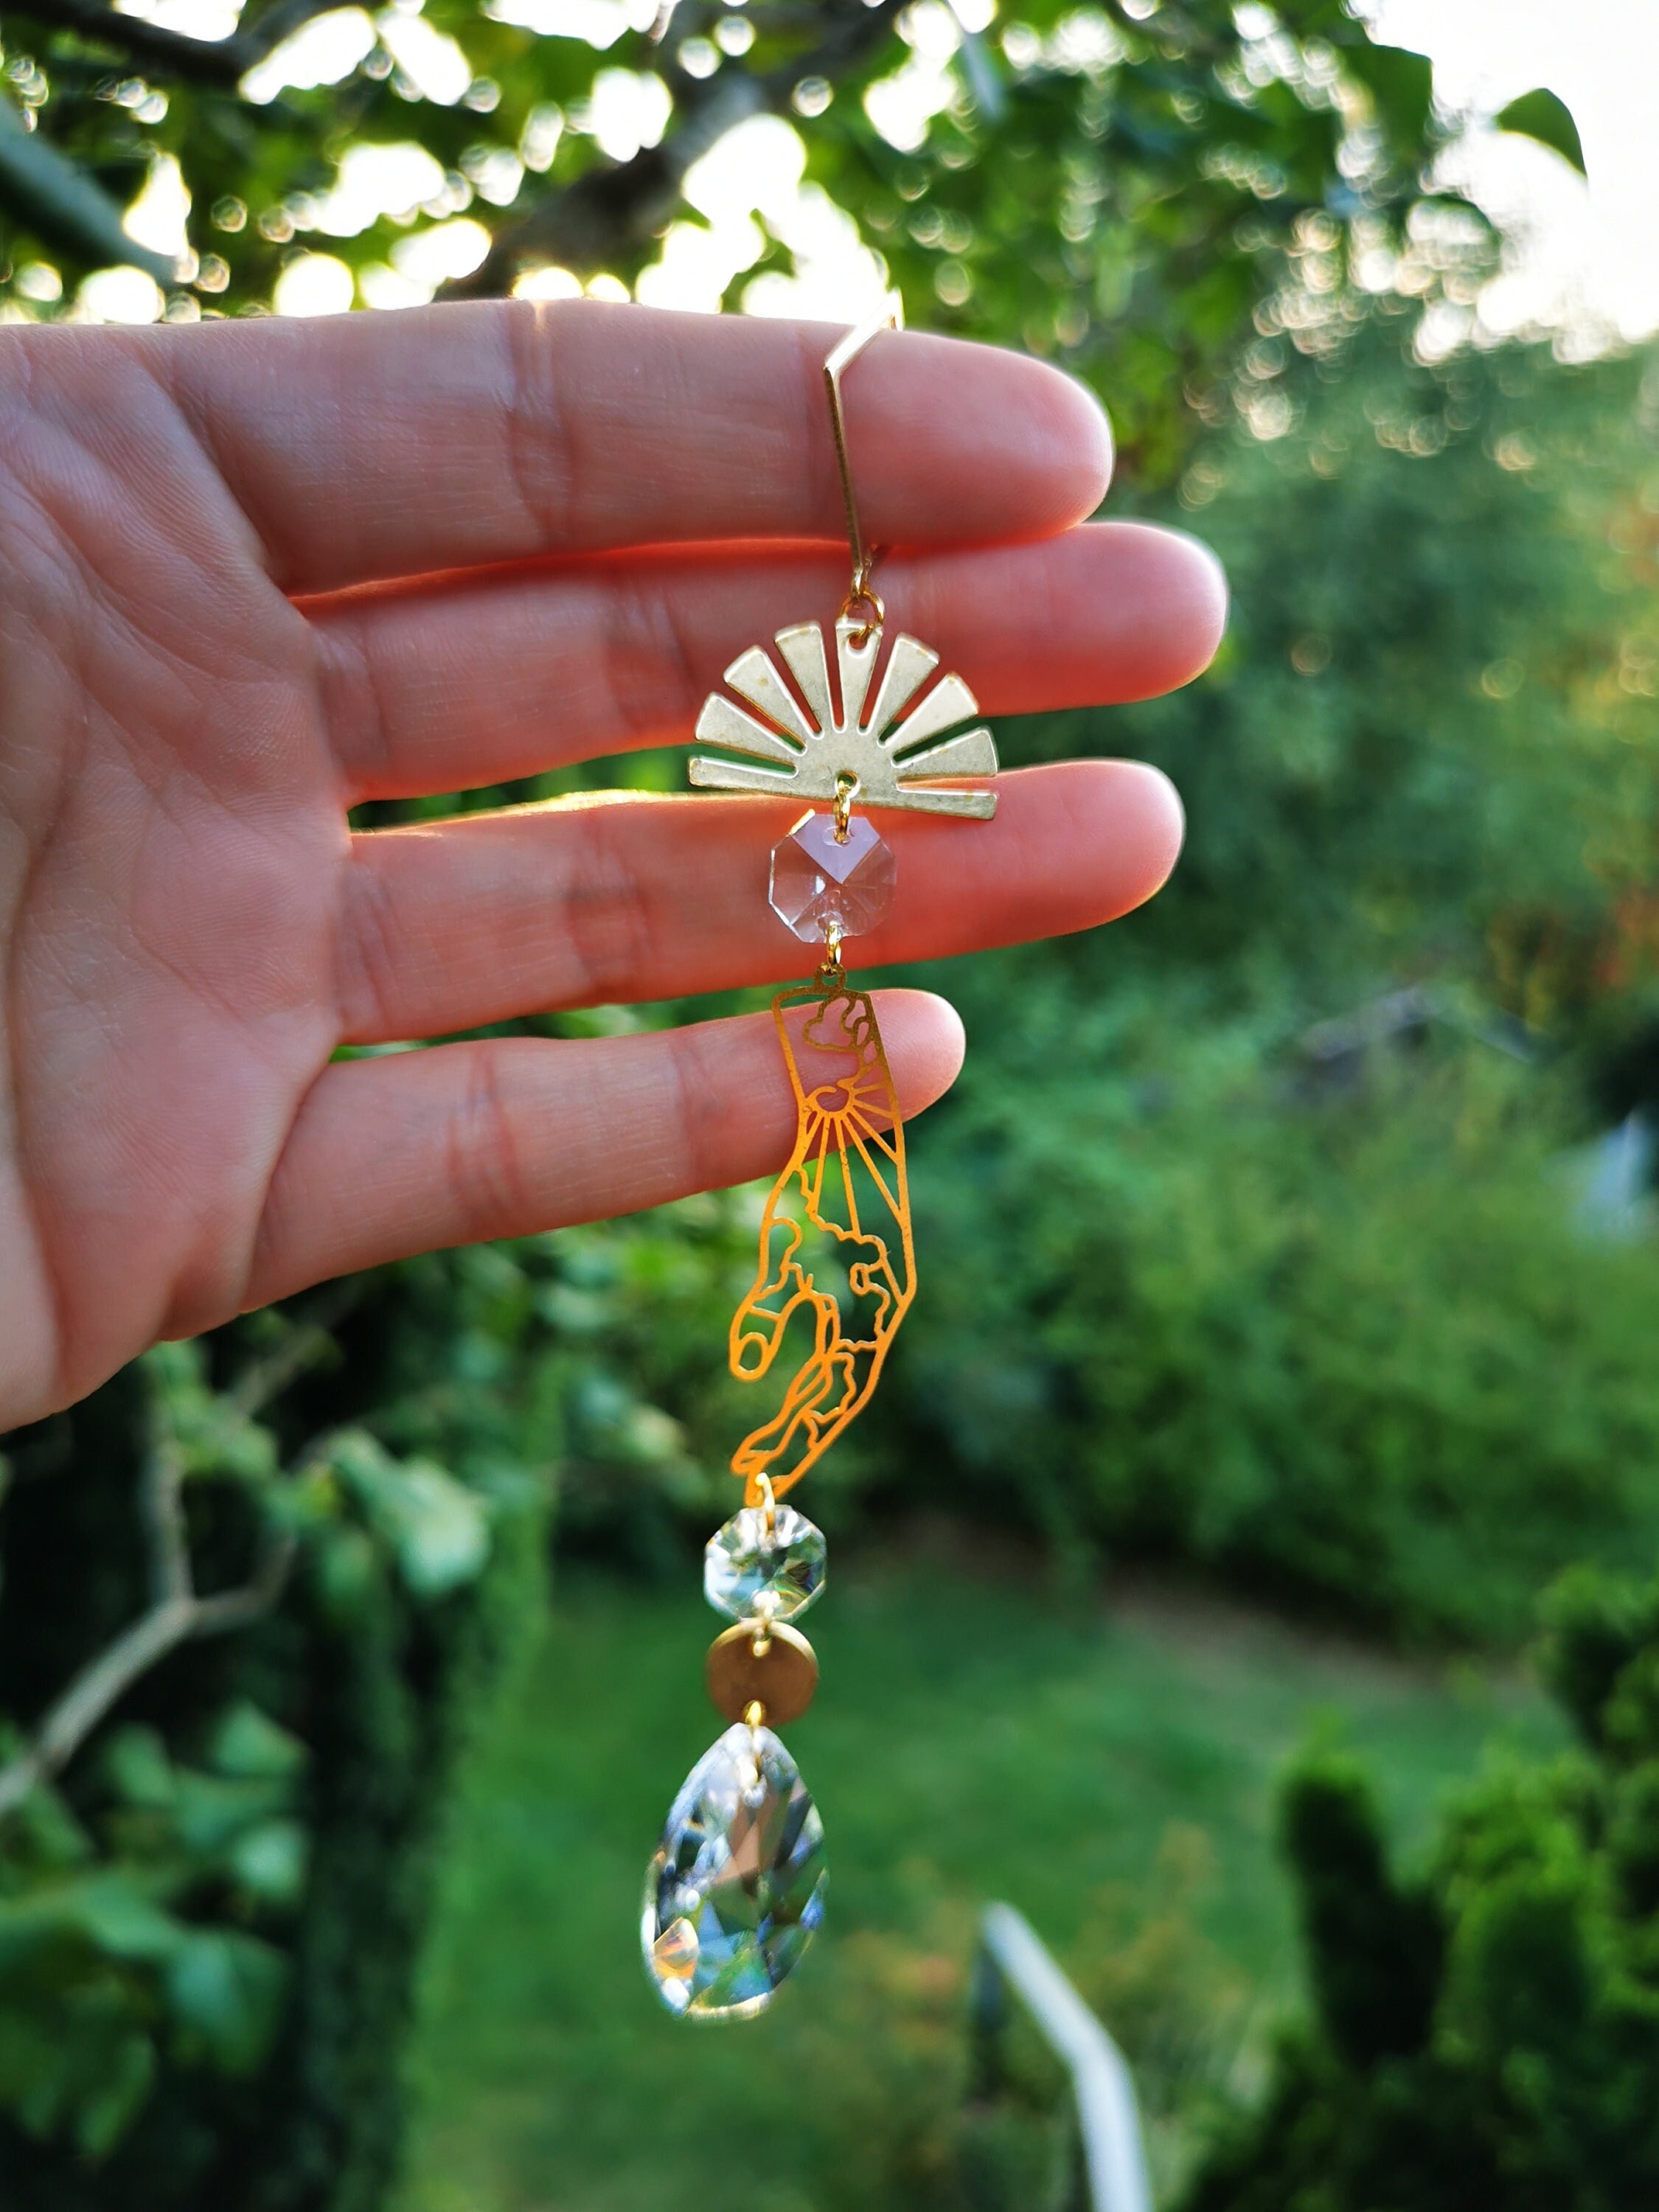 Attrape-soleil avec des perles transparentes - Guide Astuces